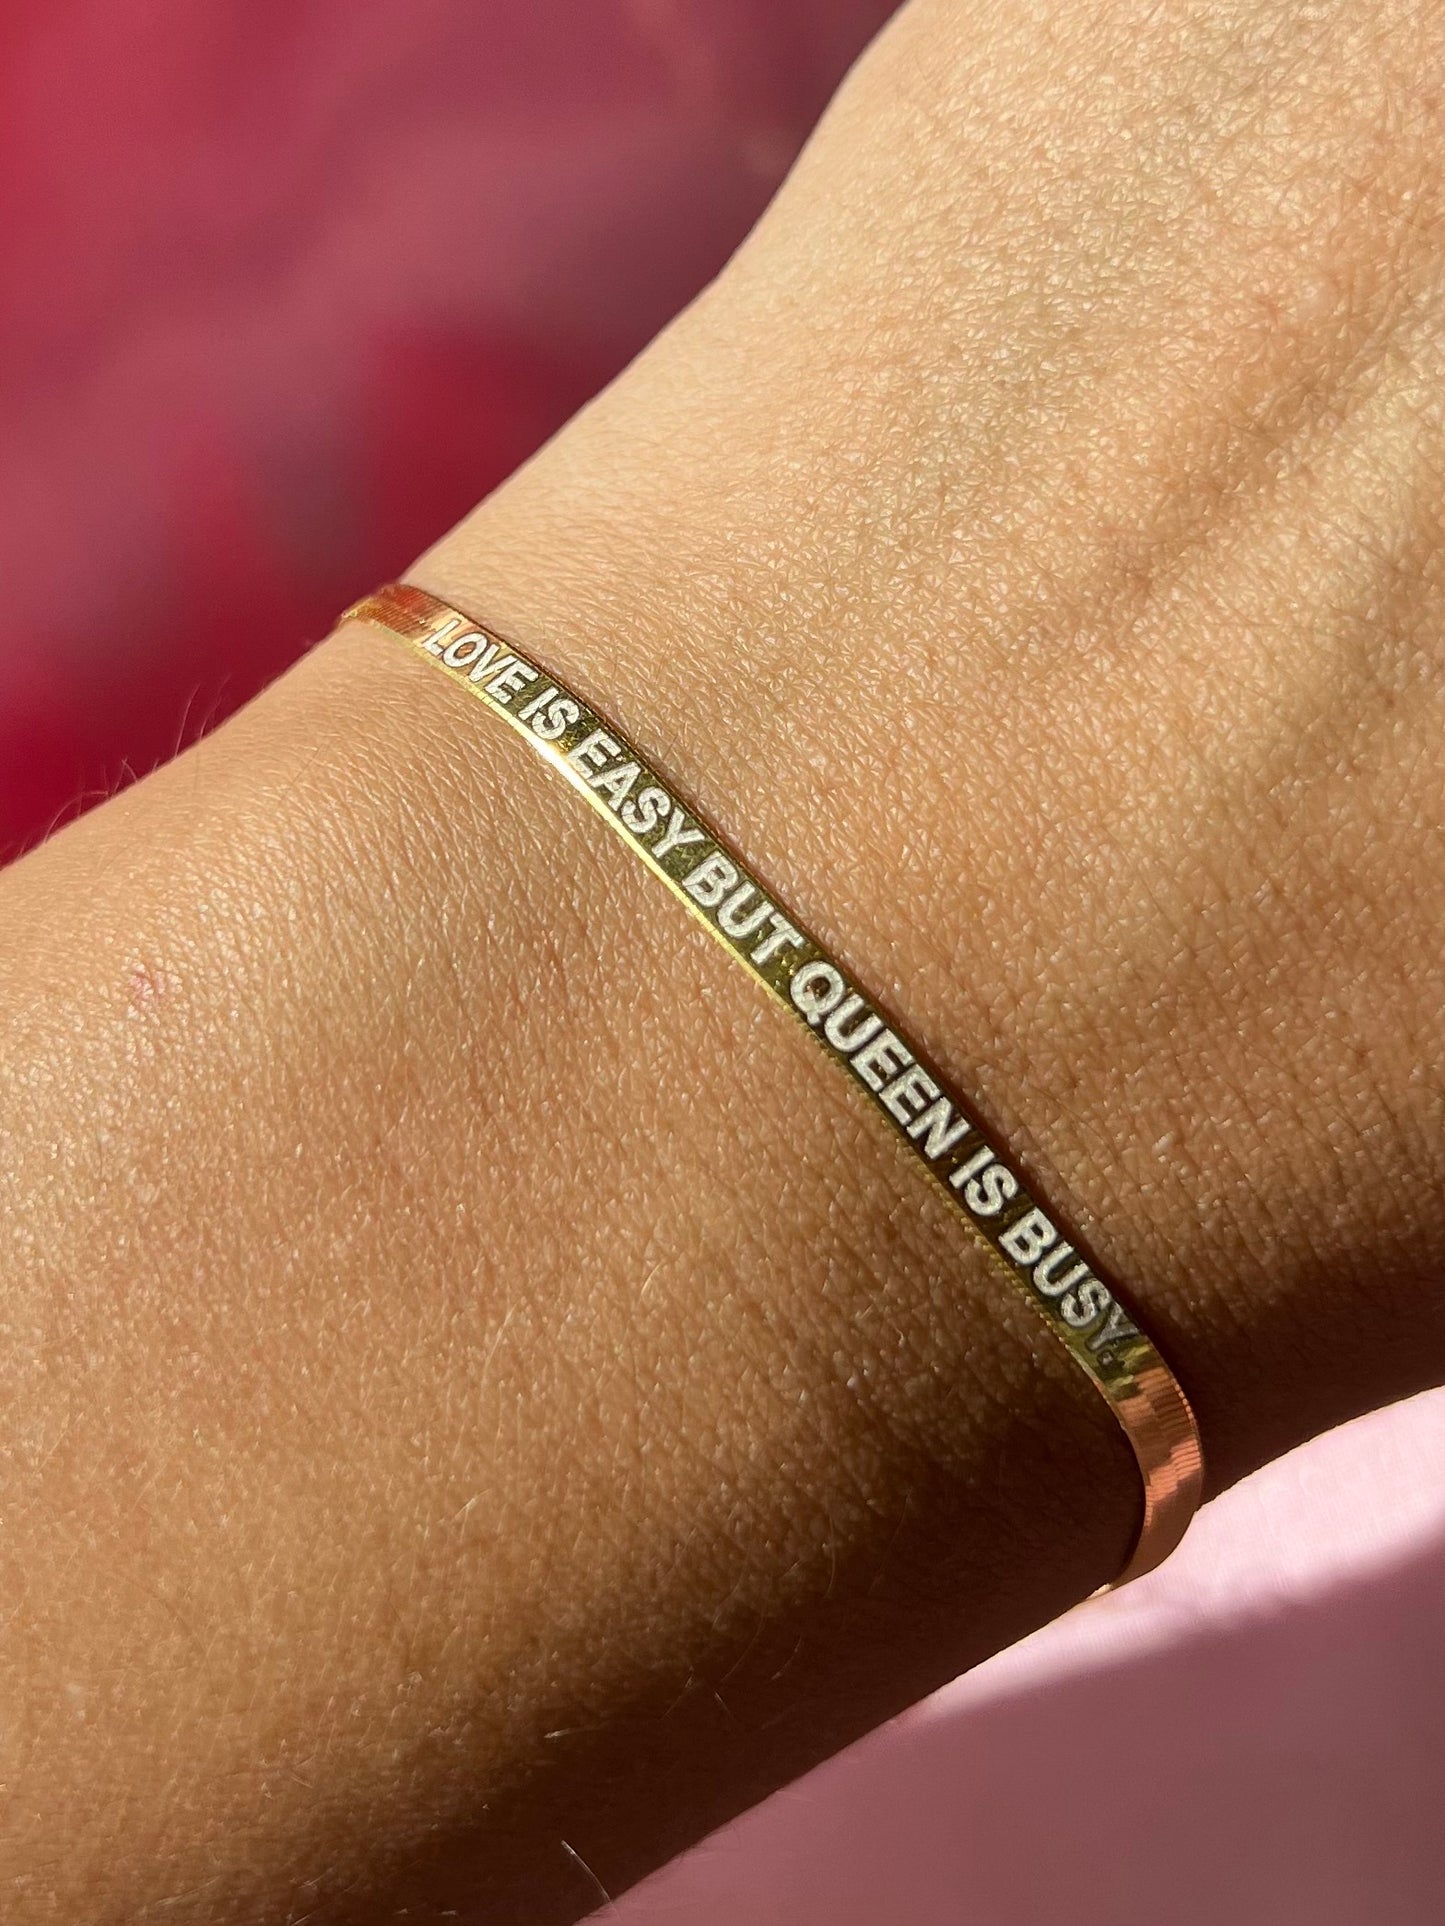 Slogan Bracelet-Name Bracelet-Write What You Want Bracelet-925Sterling Silver Bracelet